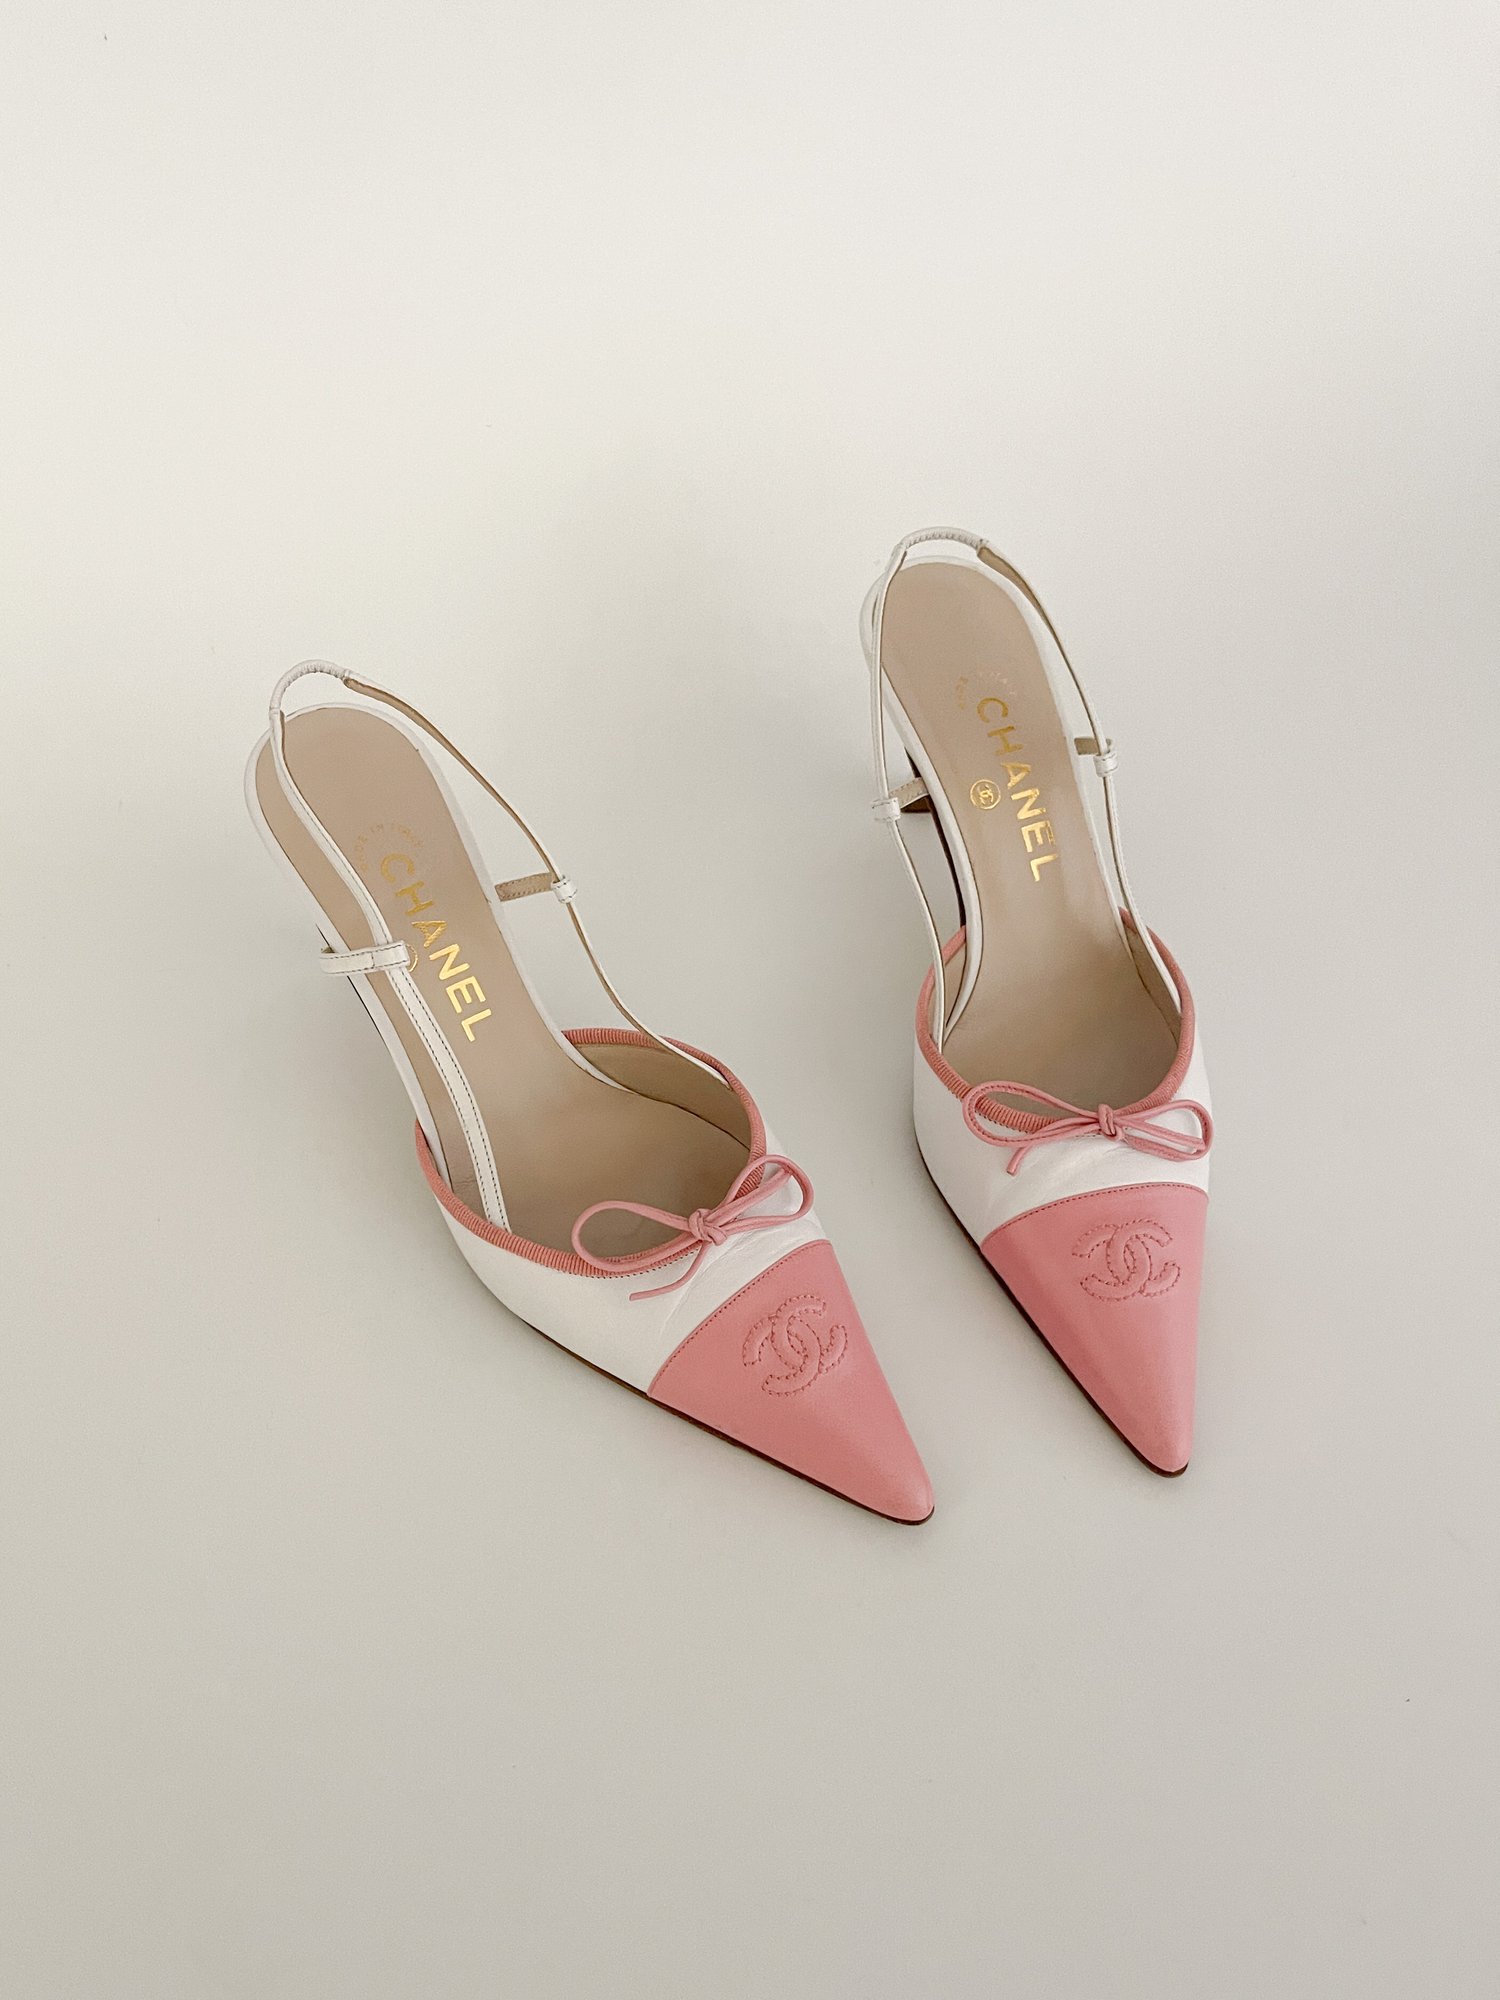 Chanel Iconic CC Pink & White Toe Cap Bow Slingback Kitten Heels